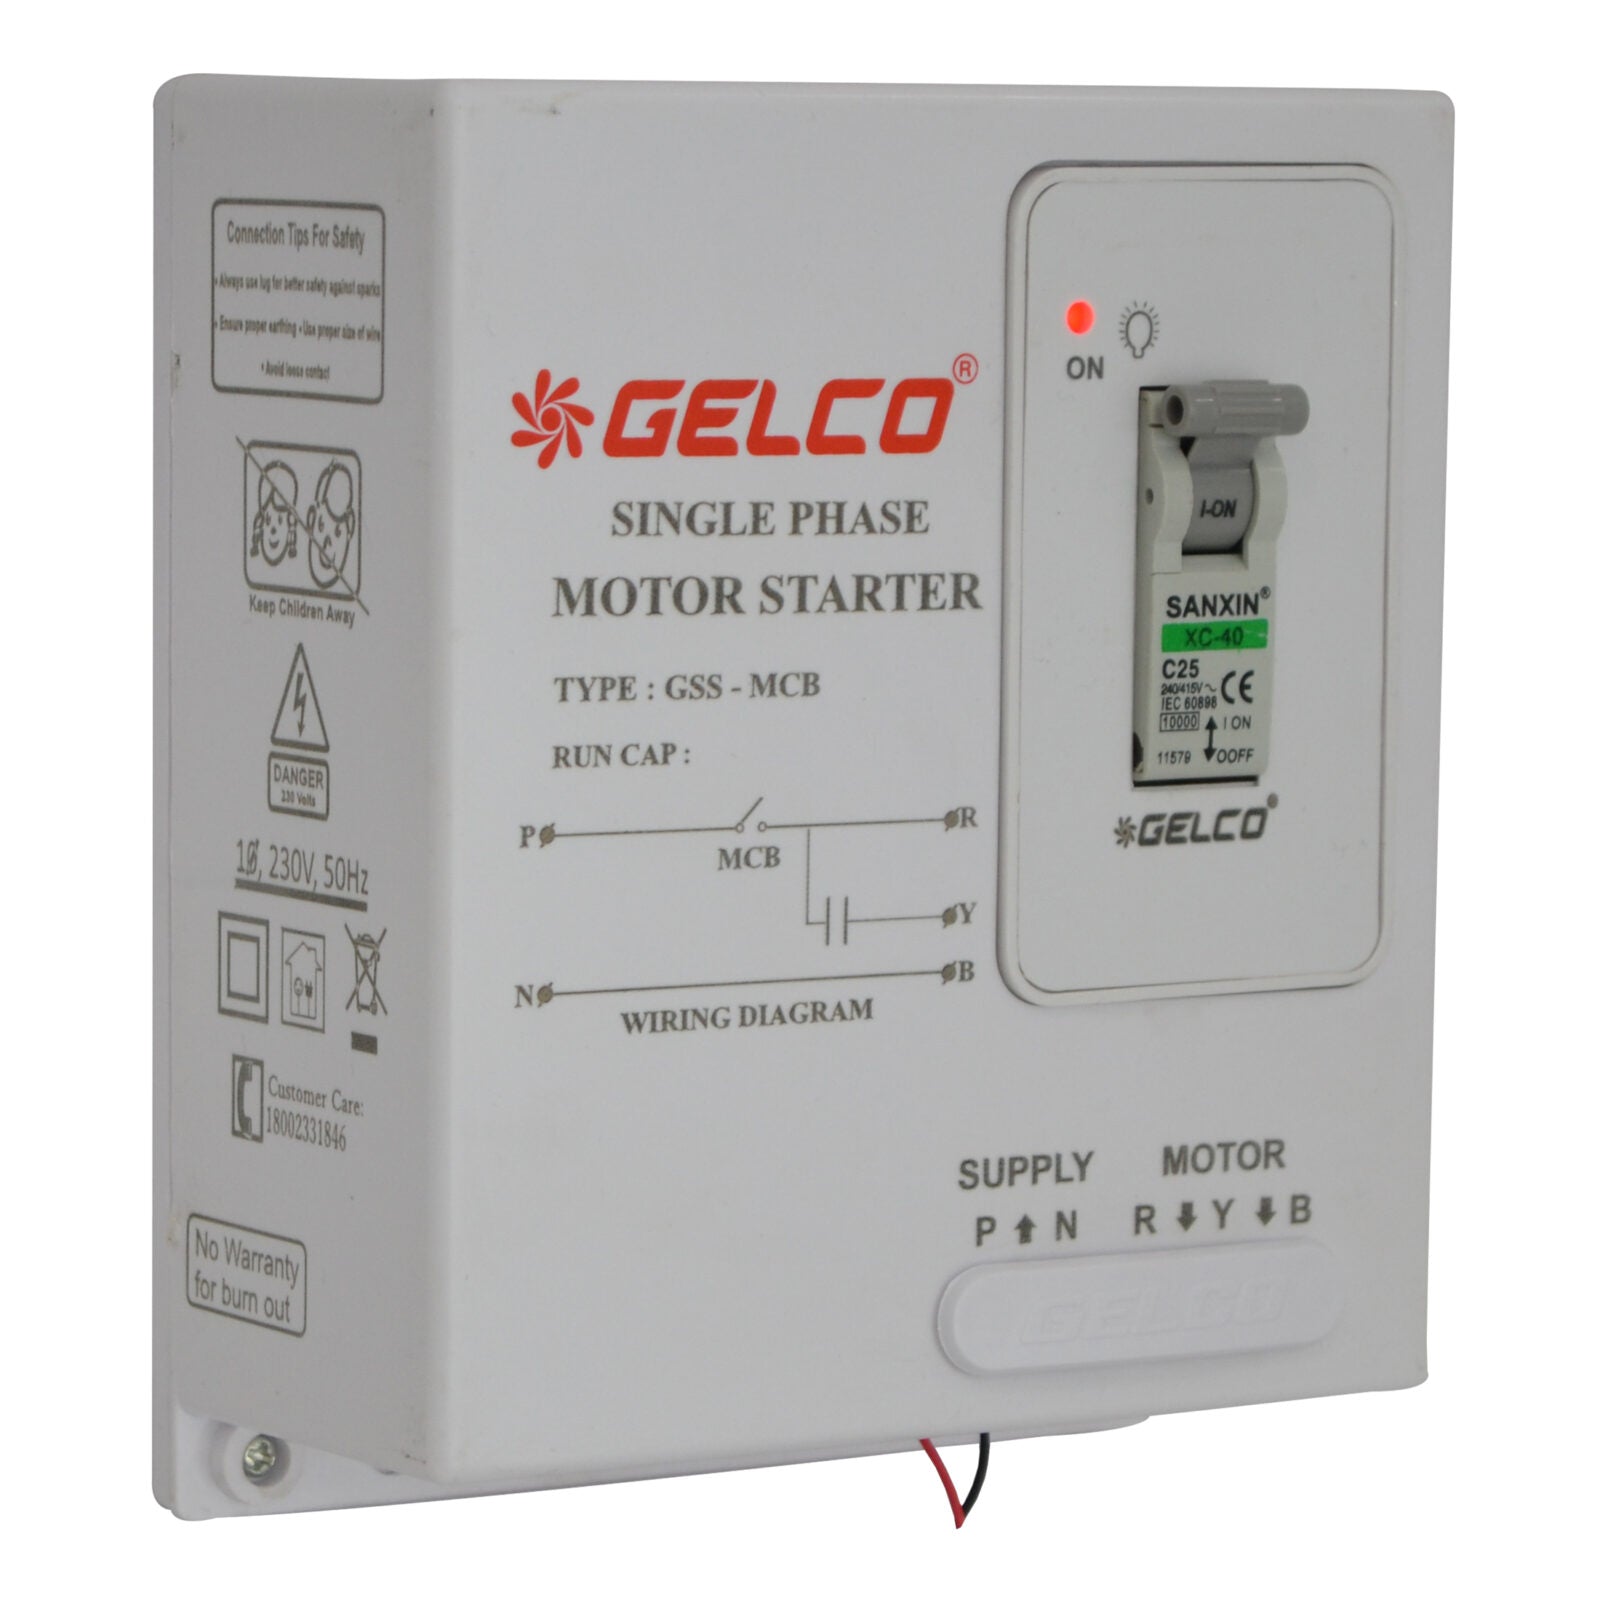 GSS-MCB - Gelco Electronics Pvt. Ltd.